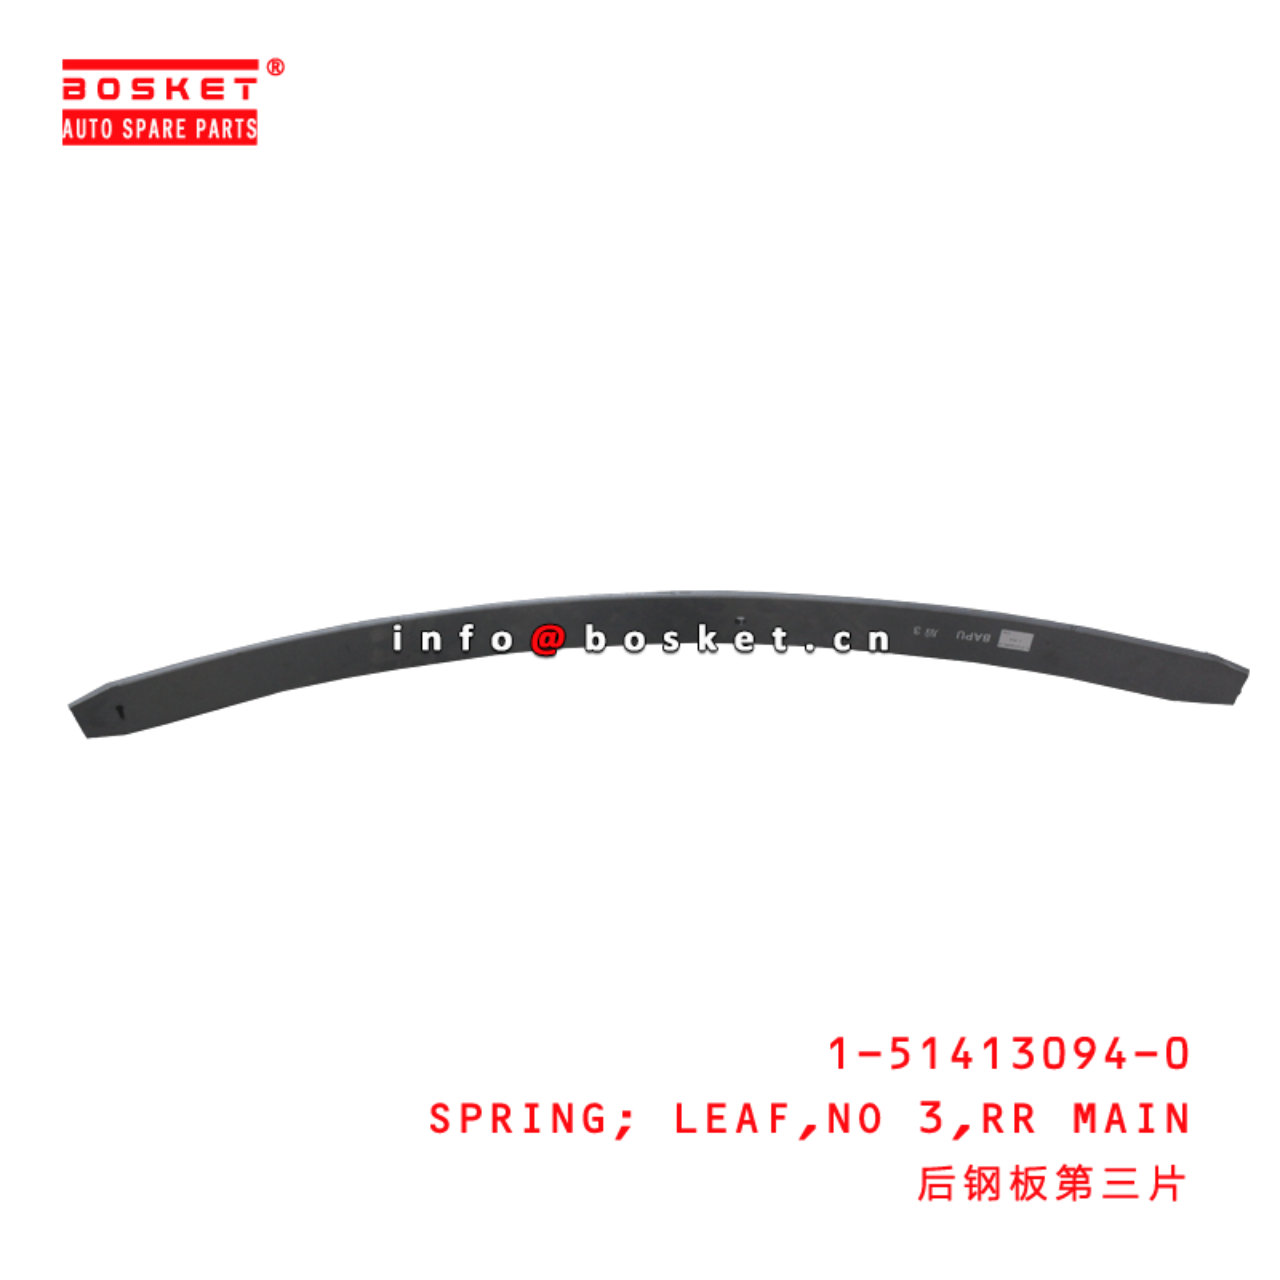 1-51413094-0 Rear Main No 3 Leaf Spring 1514130940 Suitable for ISUZU FVR 33